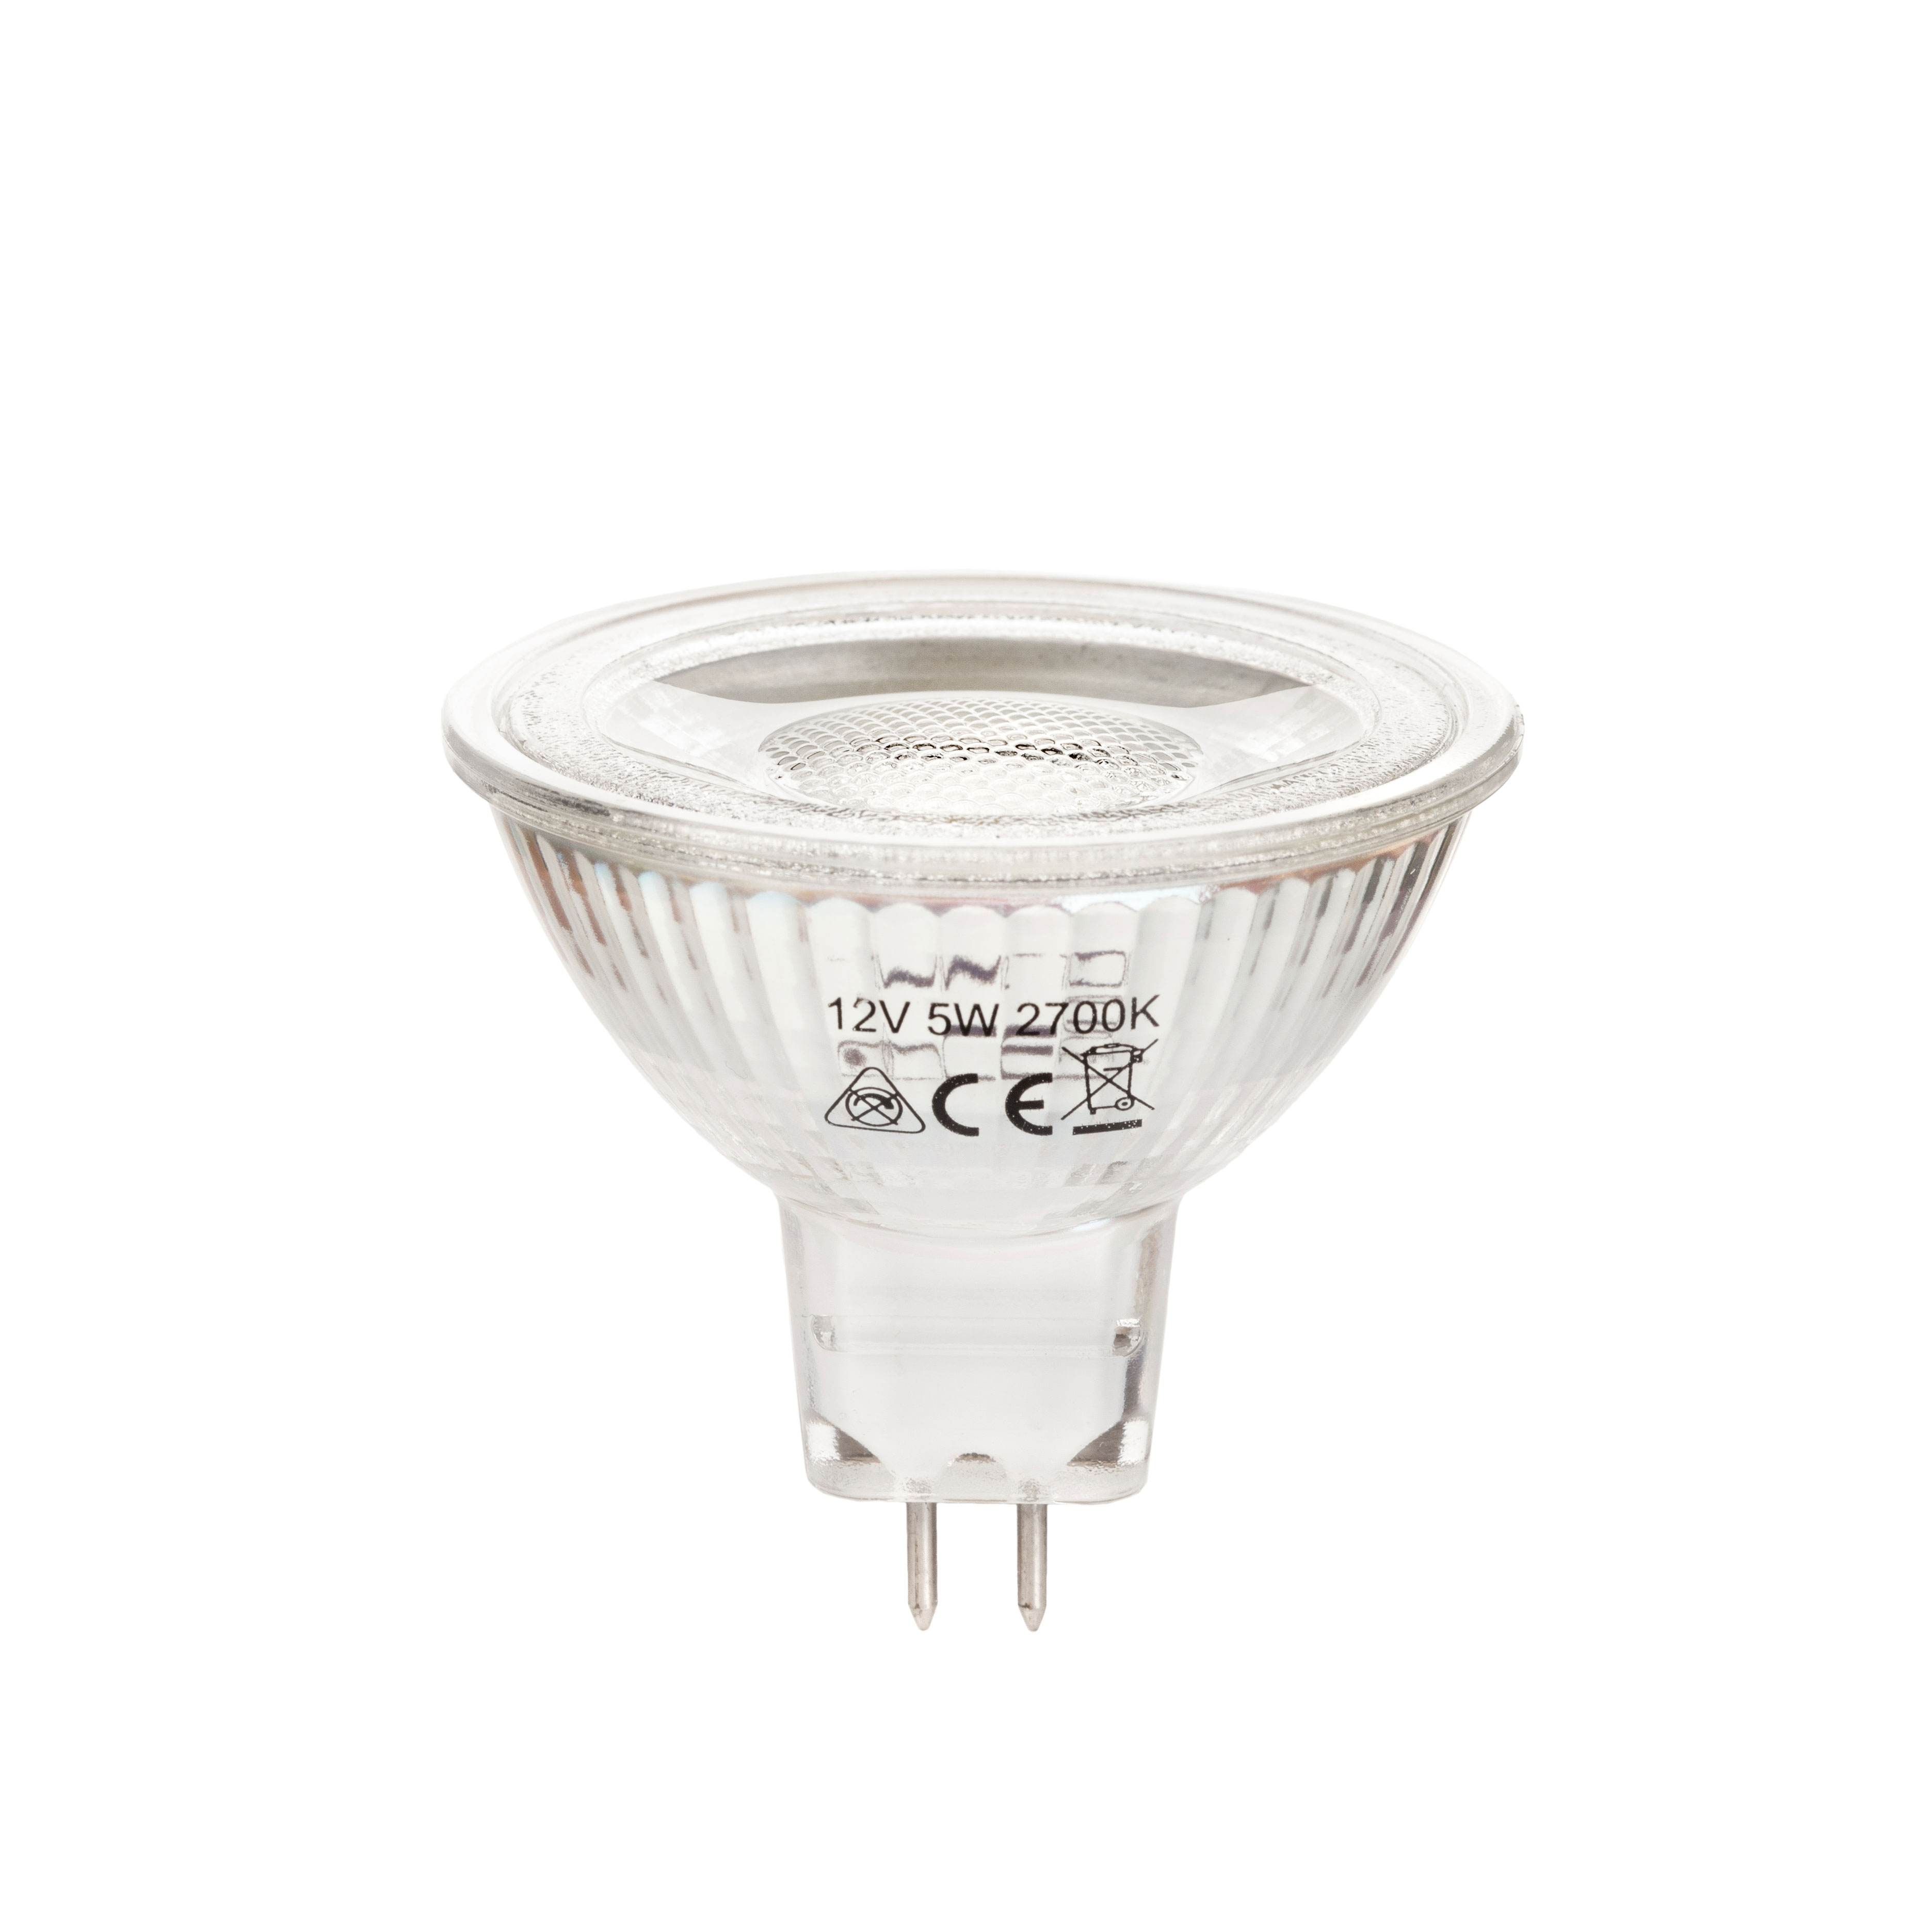 LED spotlight MR16 5W COB GU 5.3 fitting product afbeelding